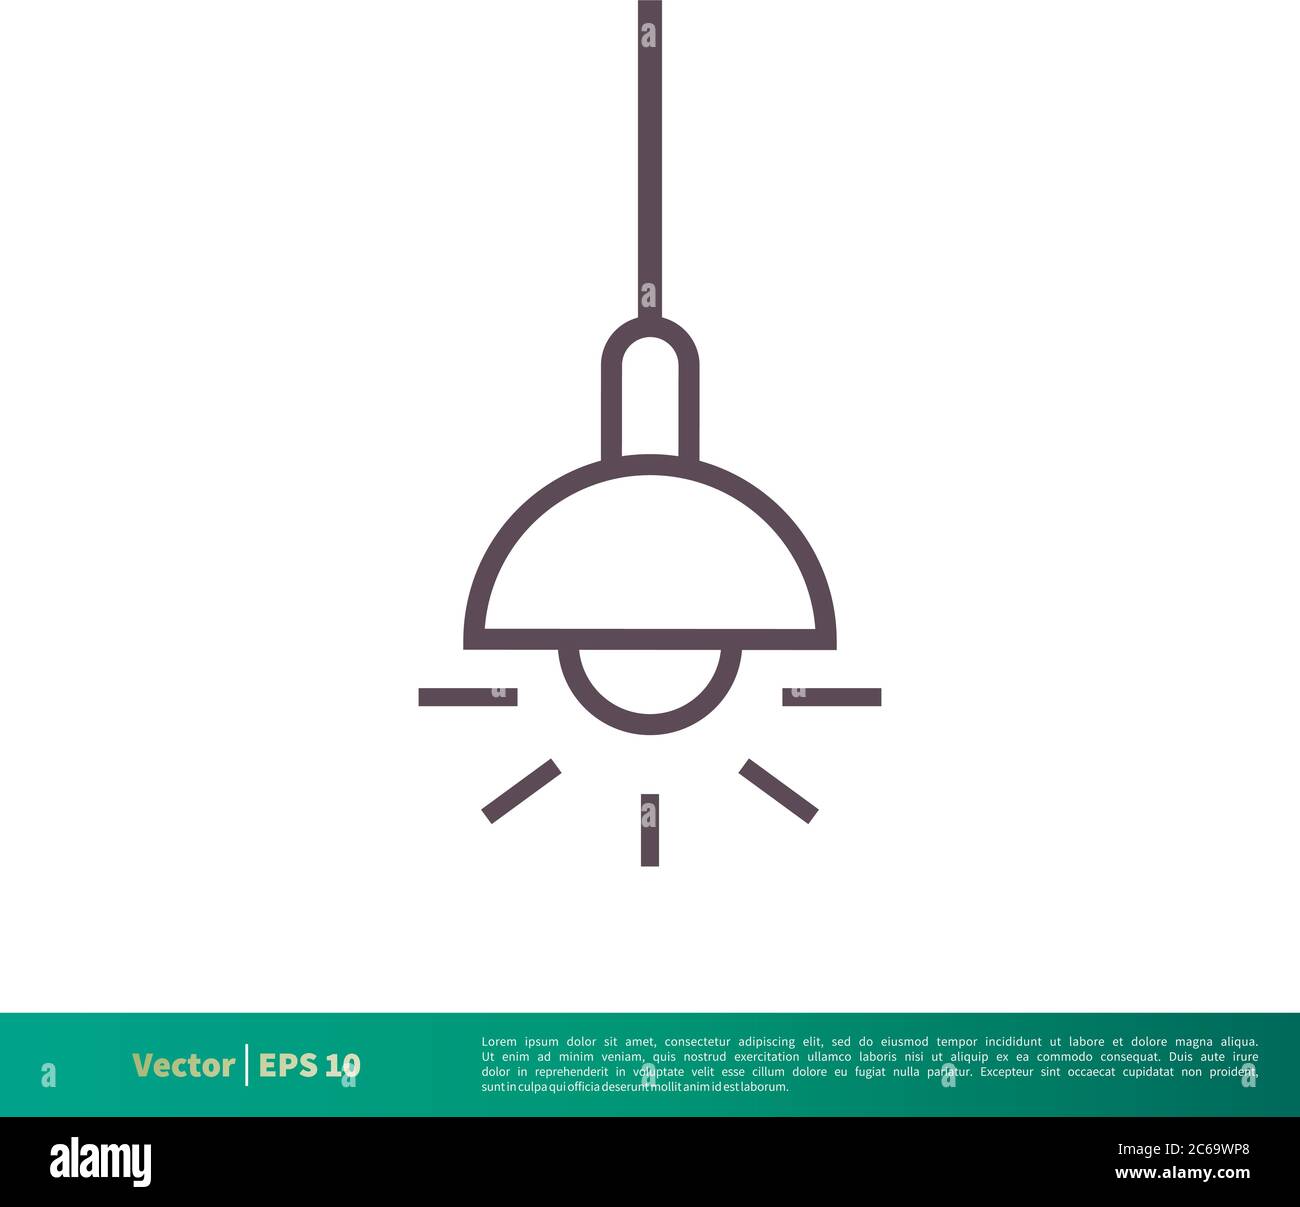 Hanging Lamp Template – Download Vector